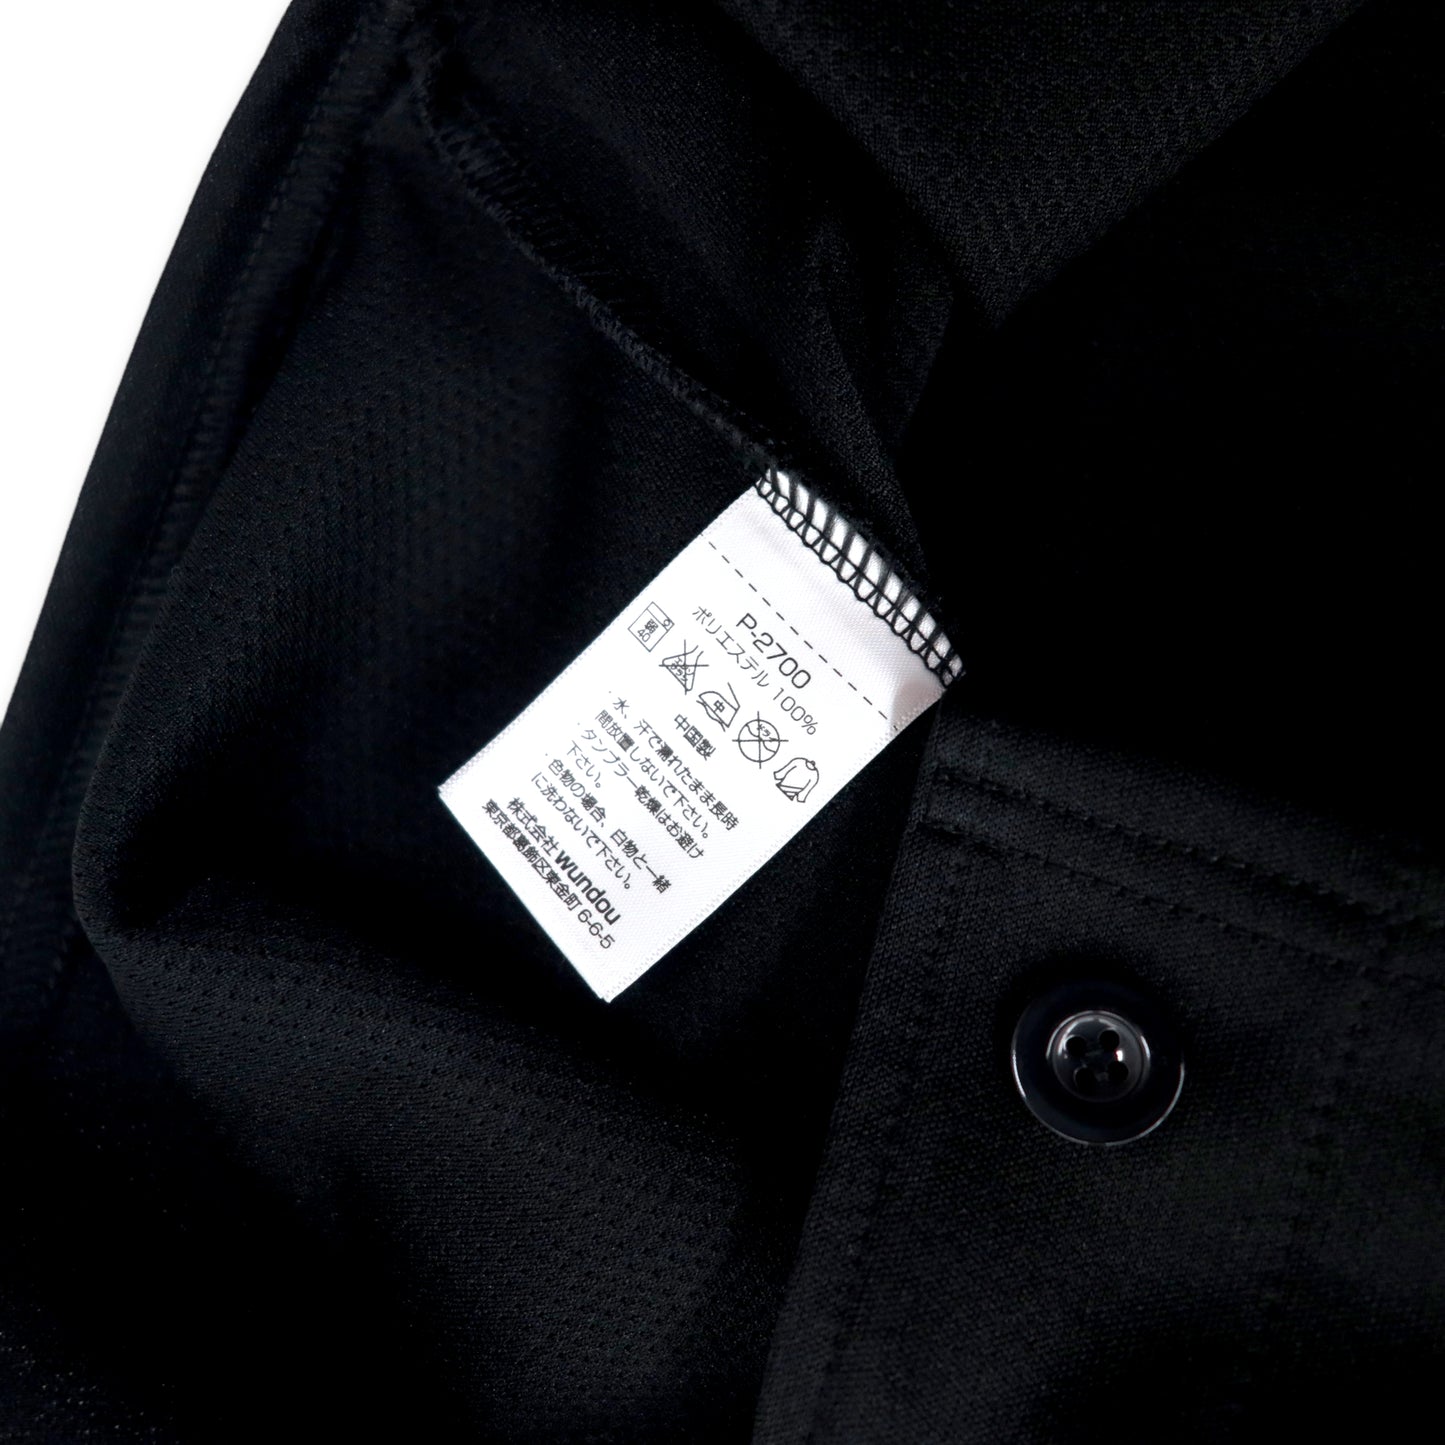 wundou ベースボールシャツ M ブラック ポリエステル P2700 未使用品